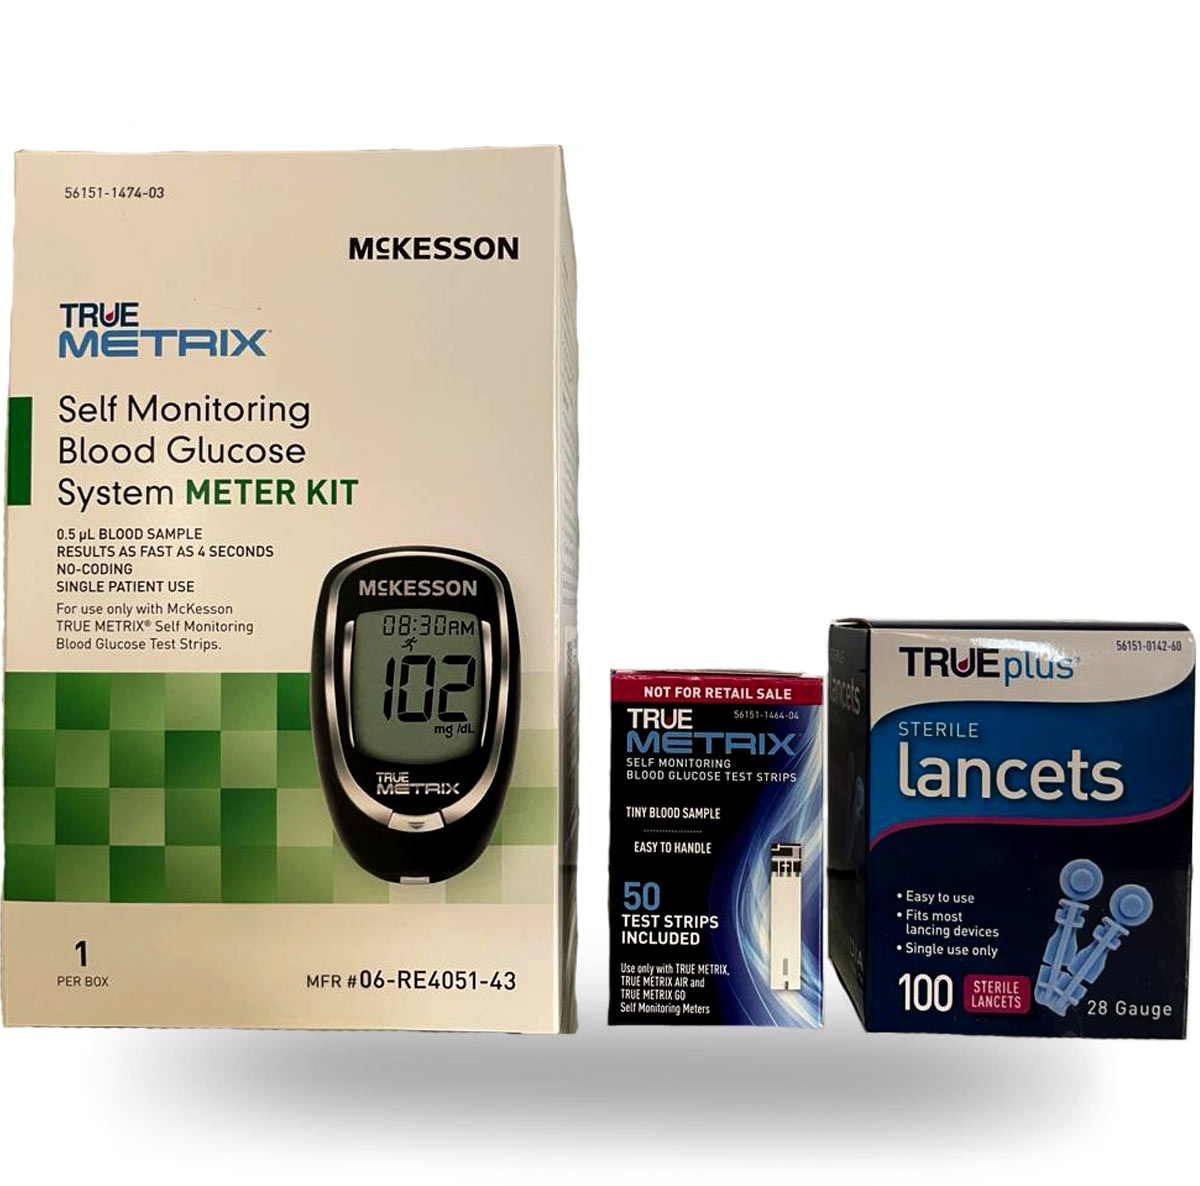 McKesson True Metrix Self Monitoring Blood Glucose System Meter Kit Plus 50 Test Strips Plus 100 Lancets